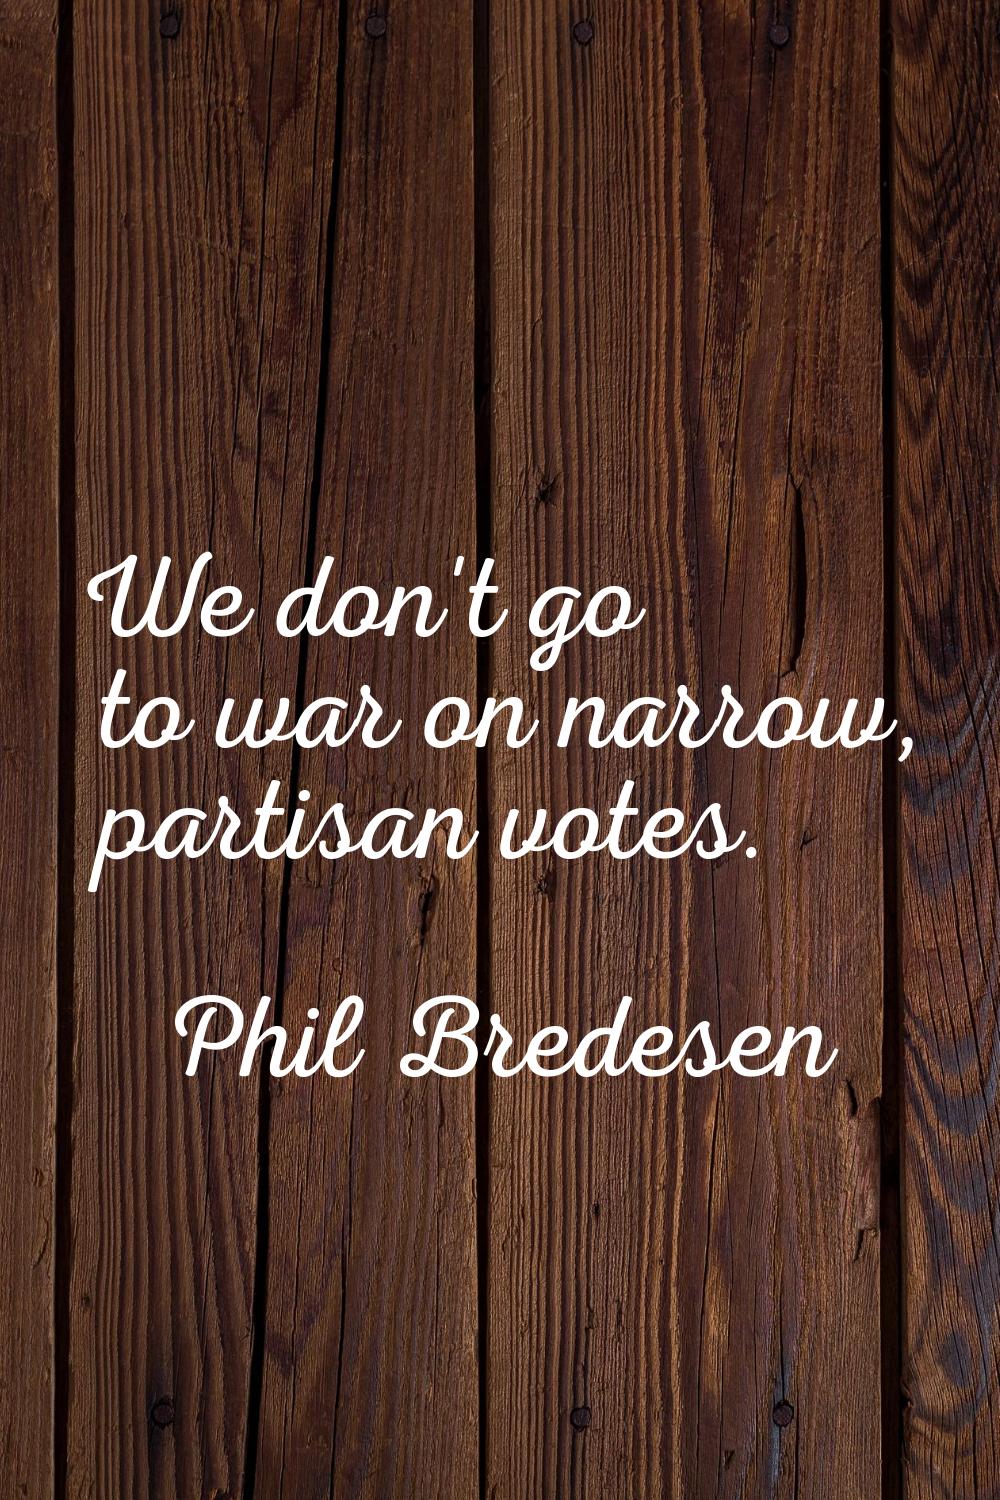 We don't go to war on narrow, partisan votes.